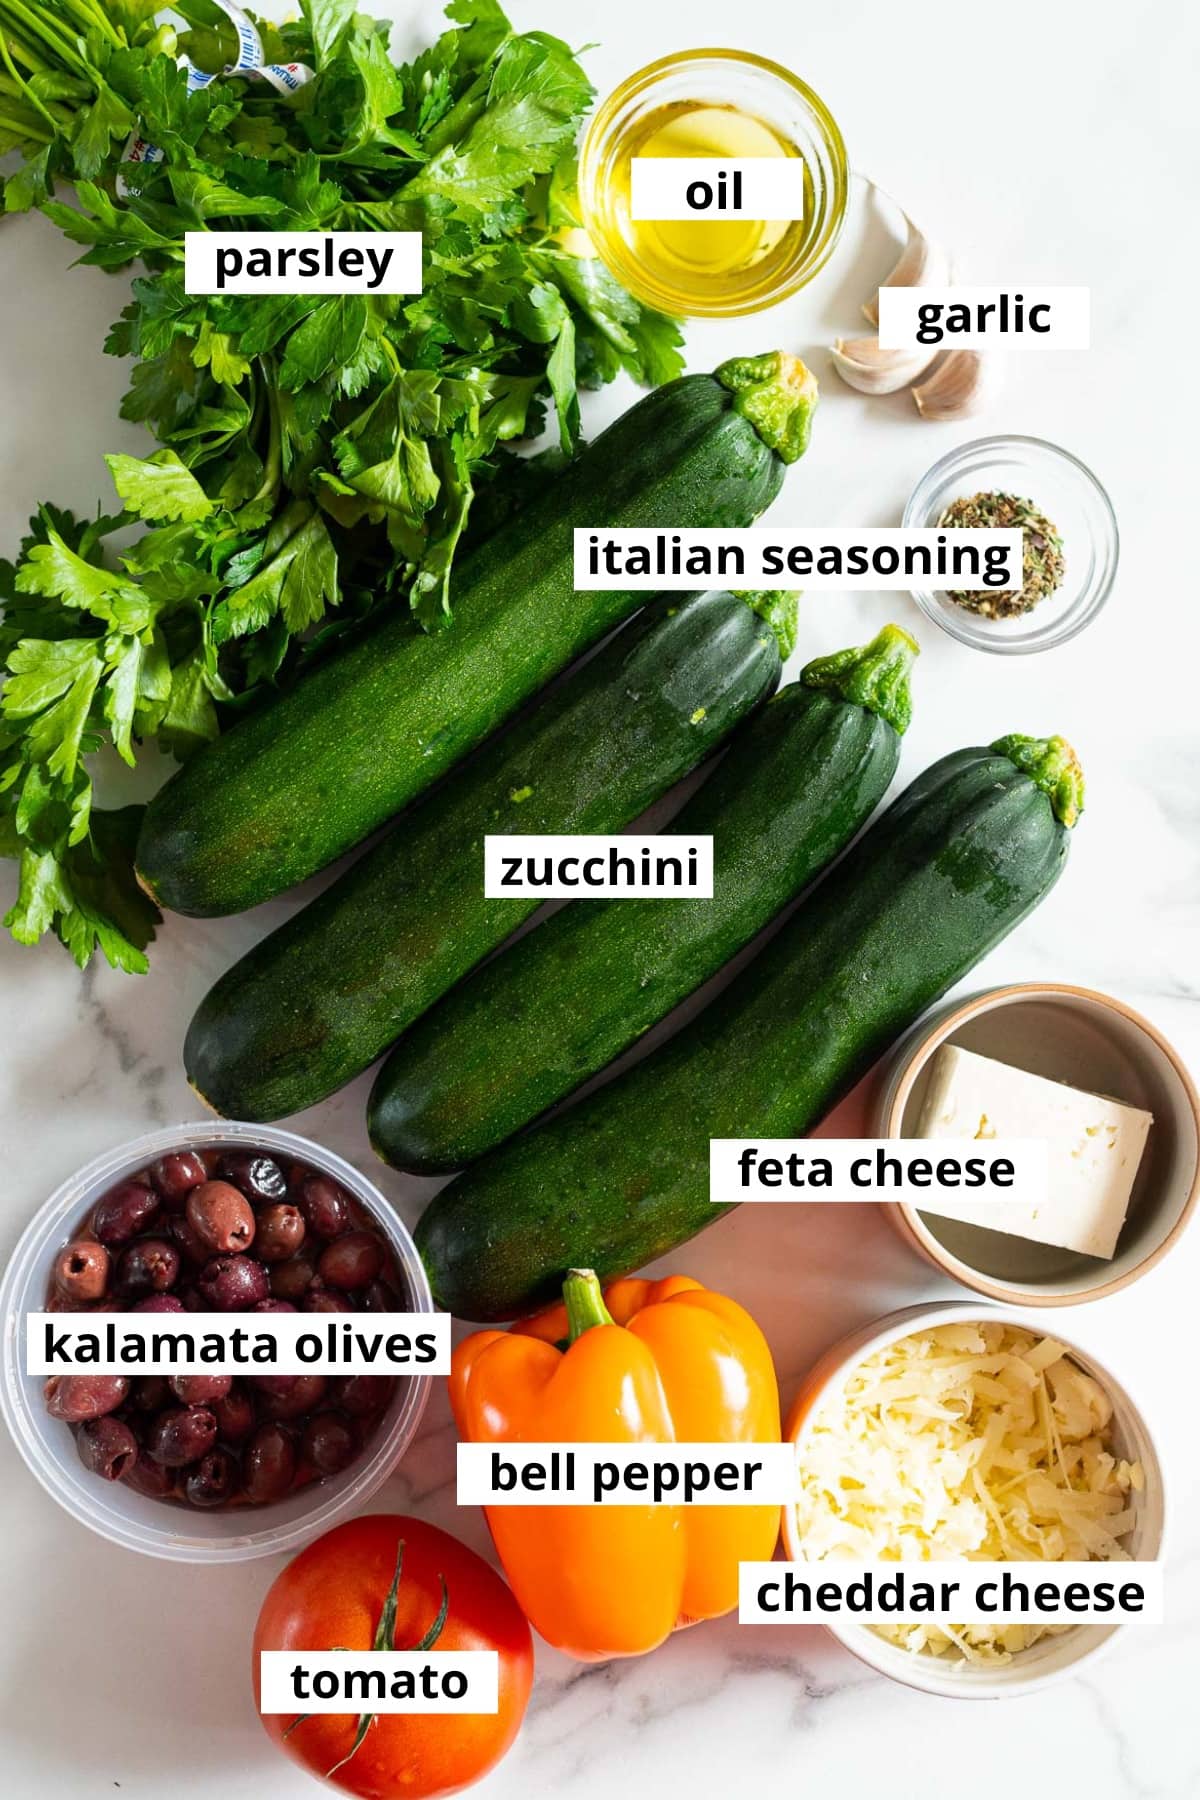 Zucchini, parsley, garlic, oil, Italian seasoning, feta cheese olives, bell pepper, tomato, cheddar cheese.